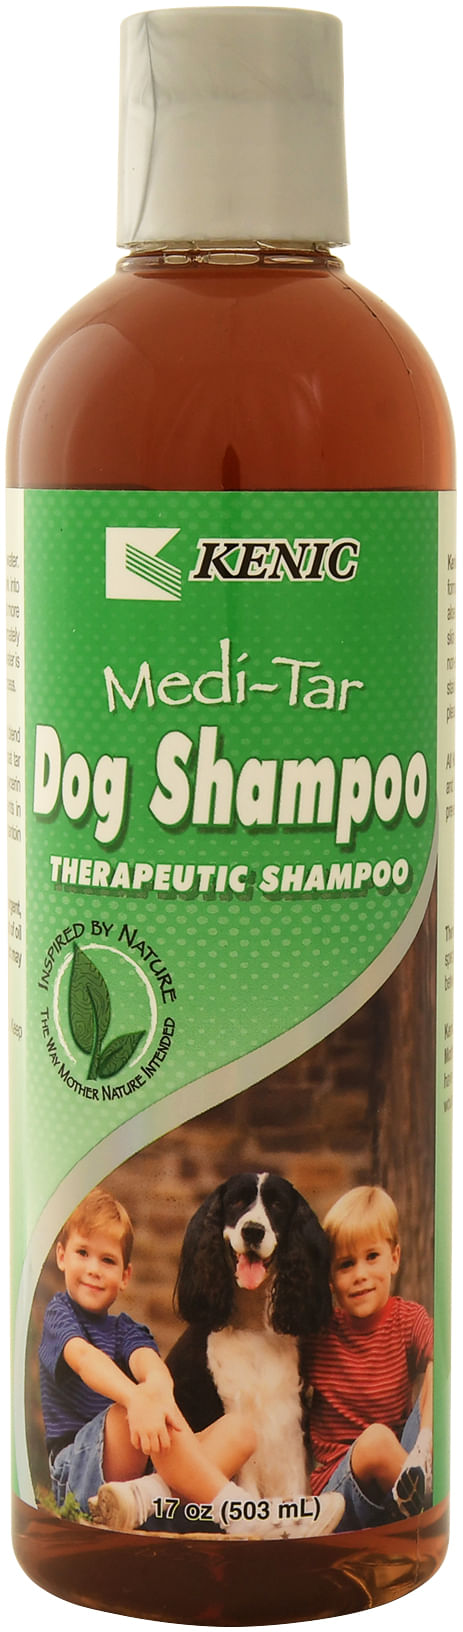 Medi-Tar-Dog-Shampoo-17-oz